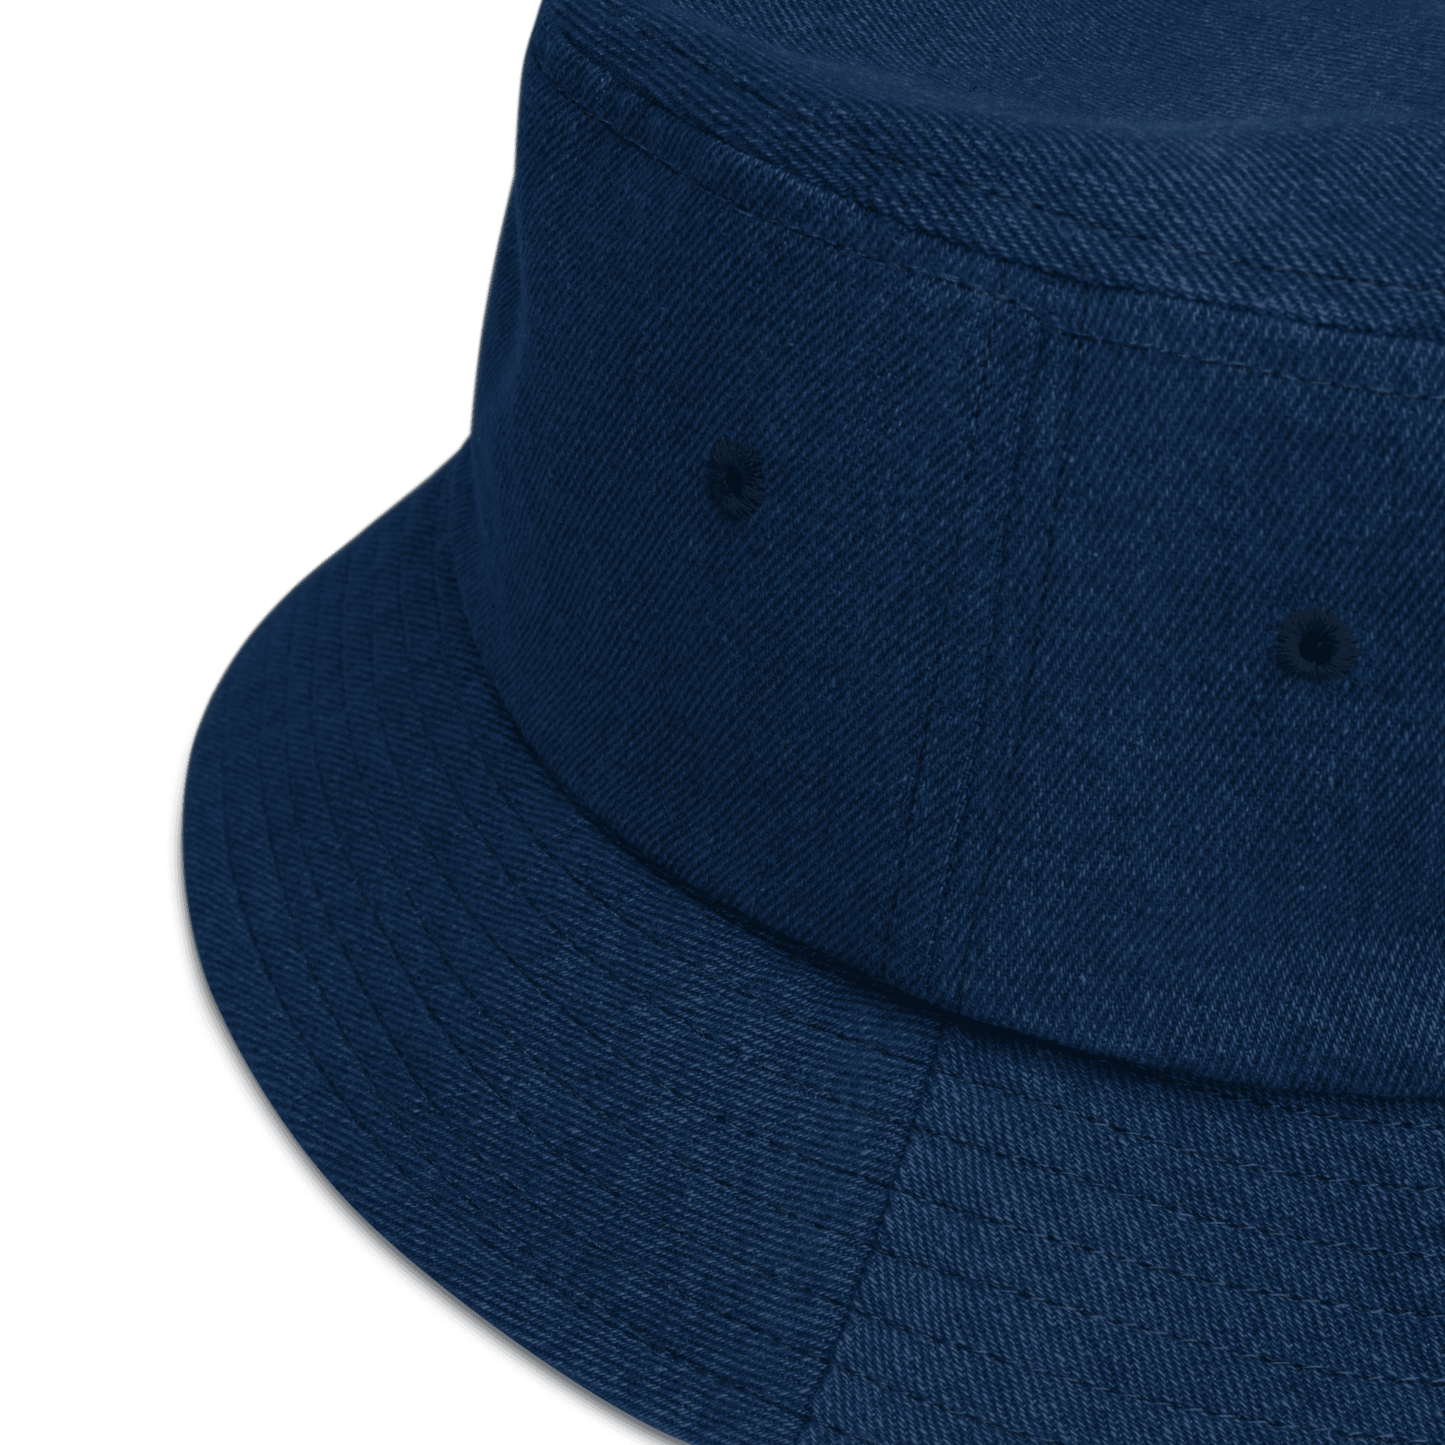 'Detroit' Denim Bucket Hat (Hebrew-Styled Font) | White Embroidery - Circumspice Michigan